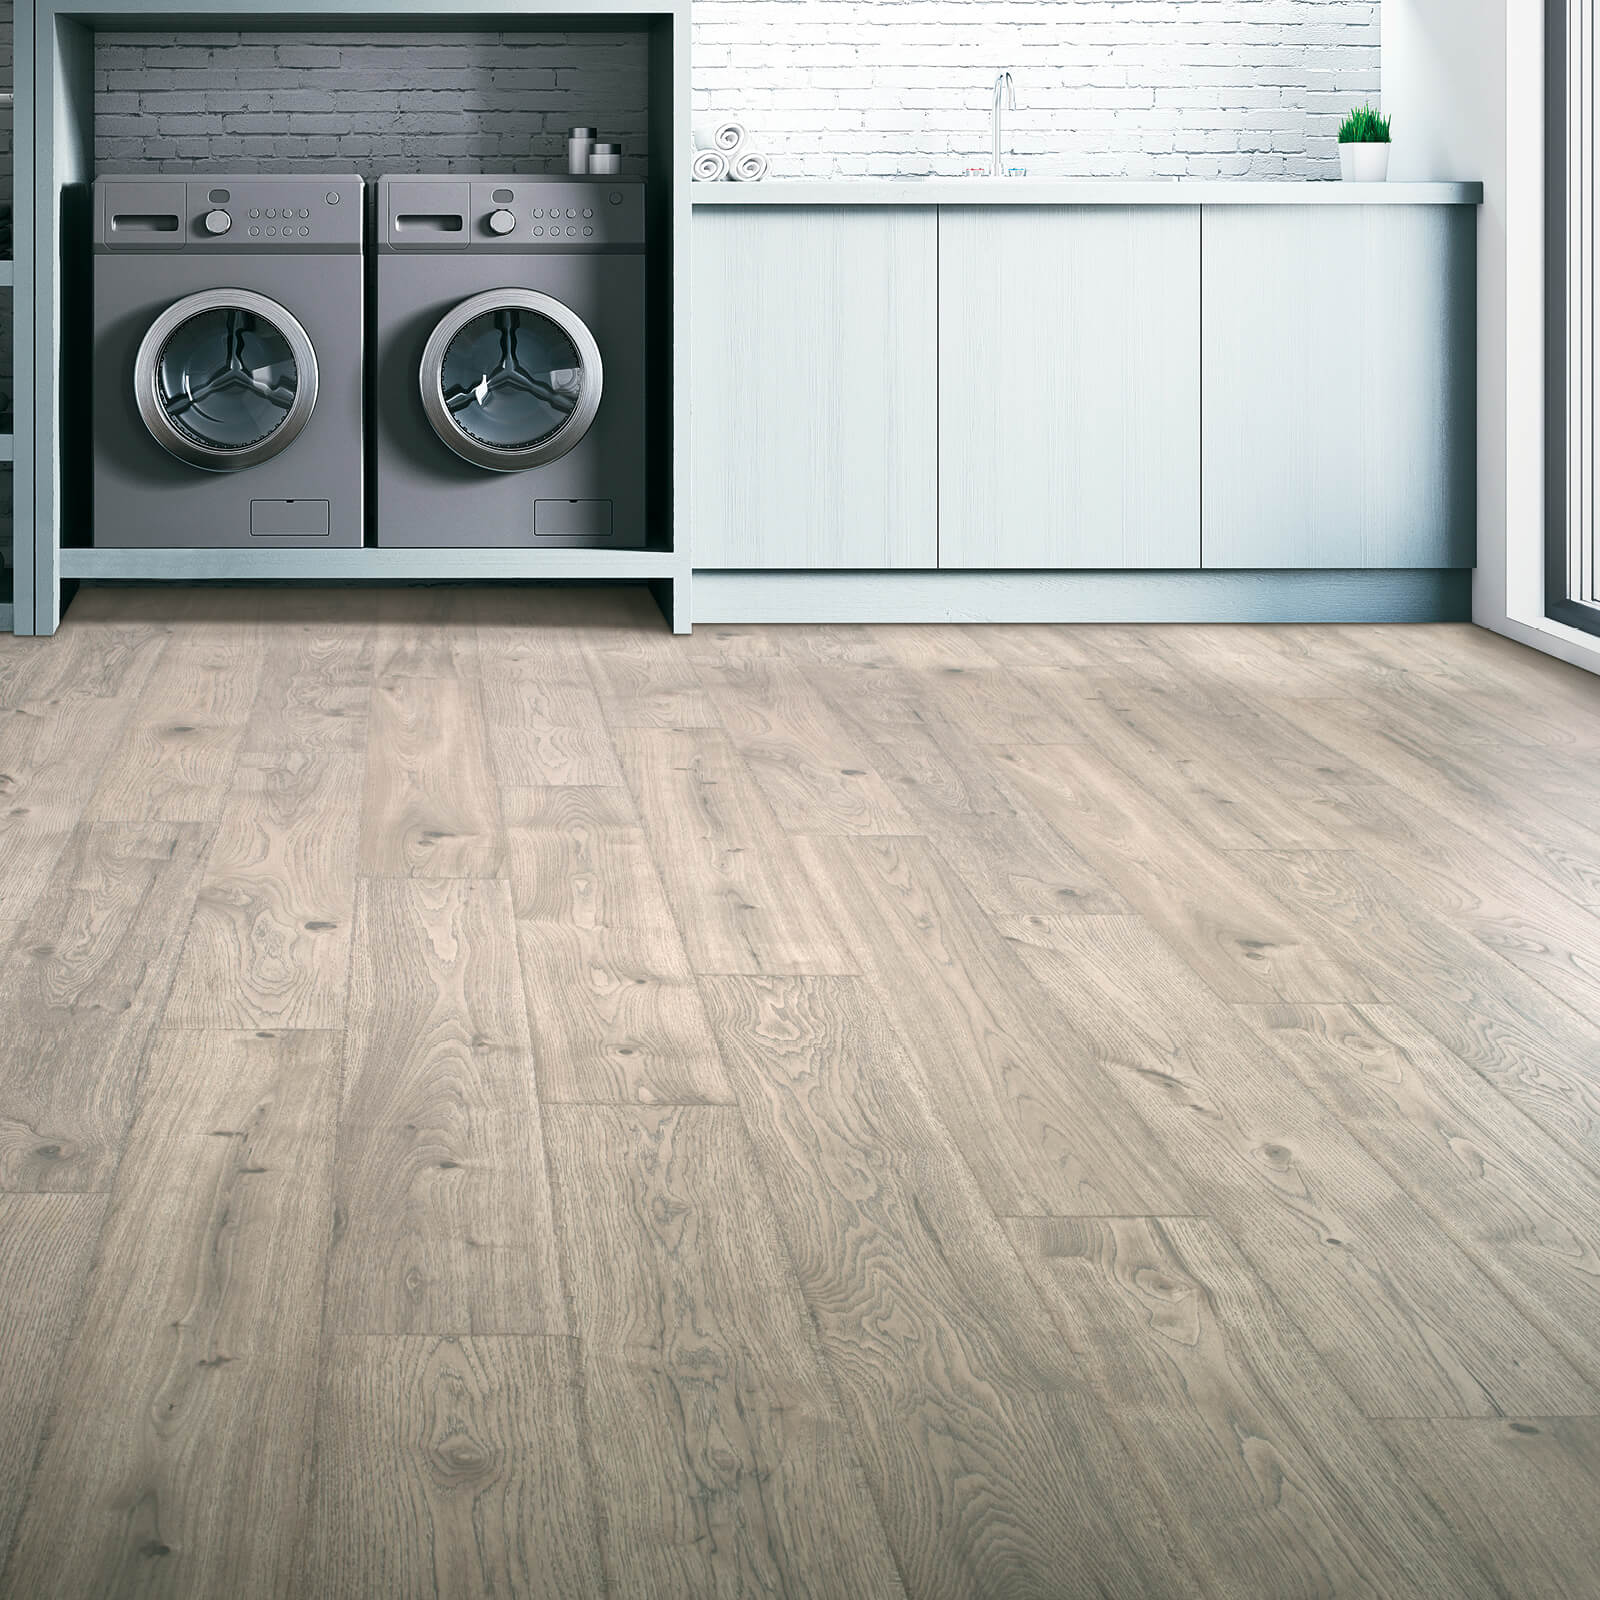 Laundry room Laminate flooring | Cleveland Carpets and Floors